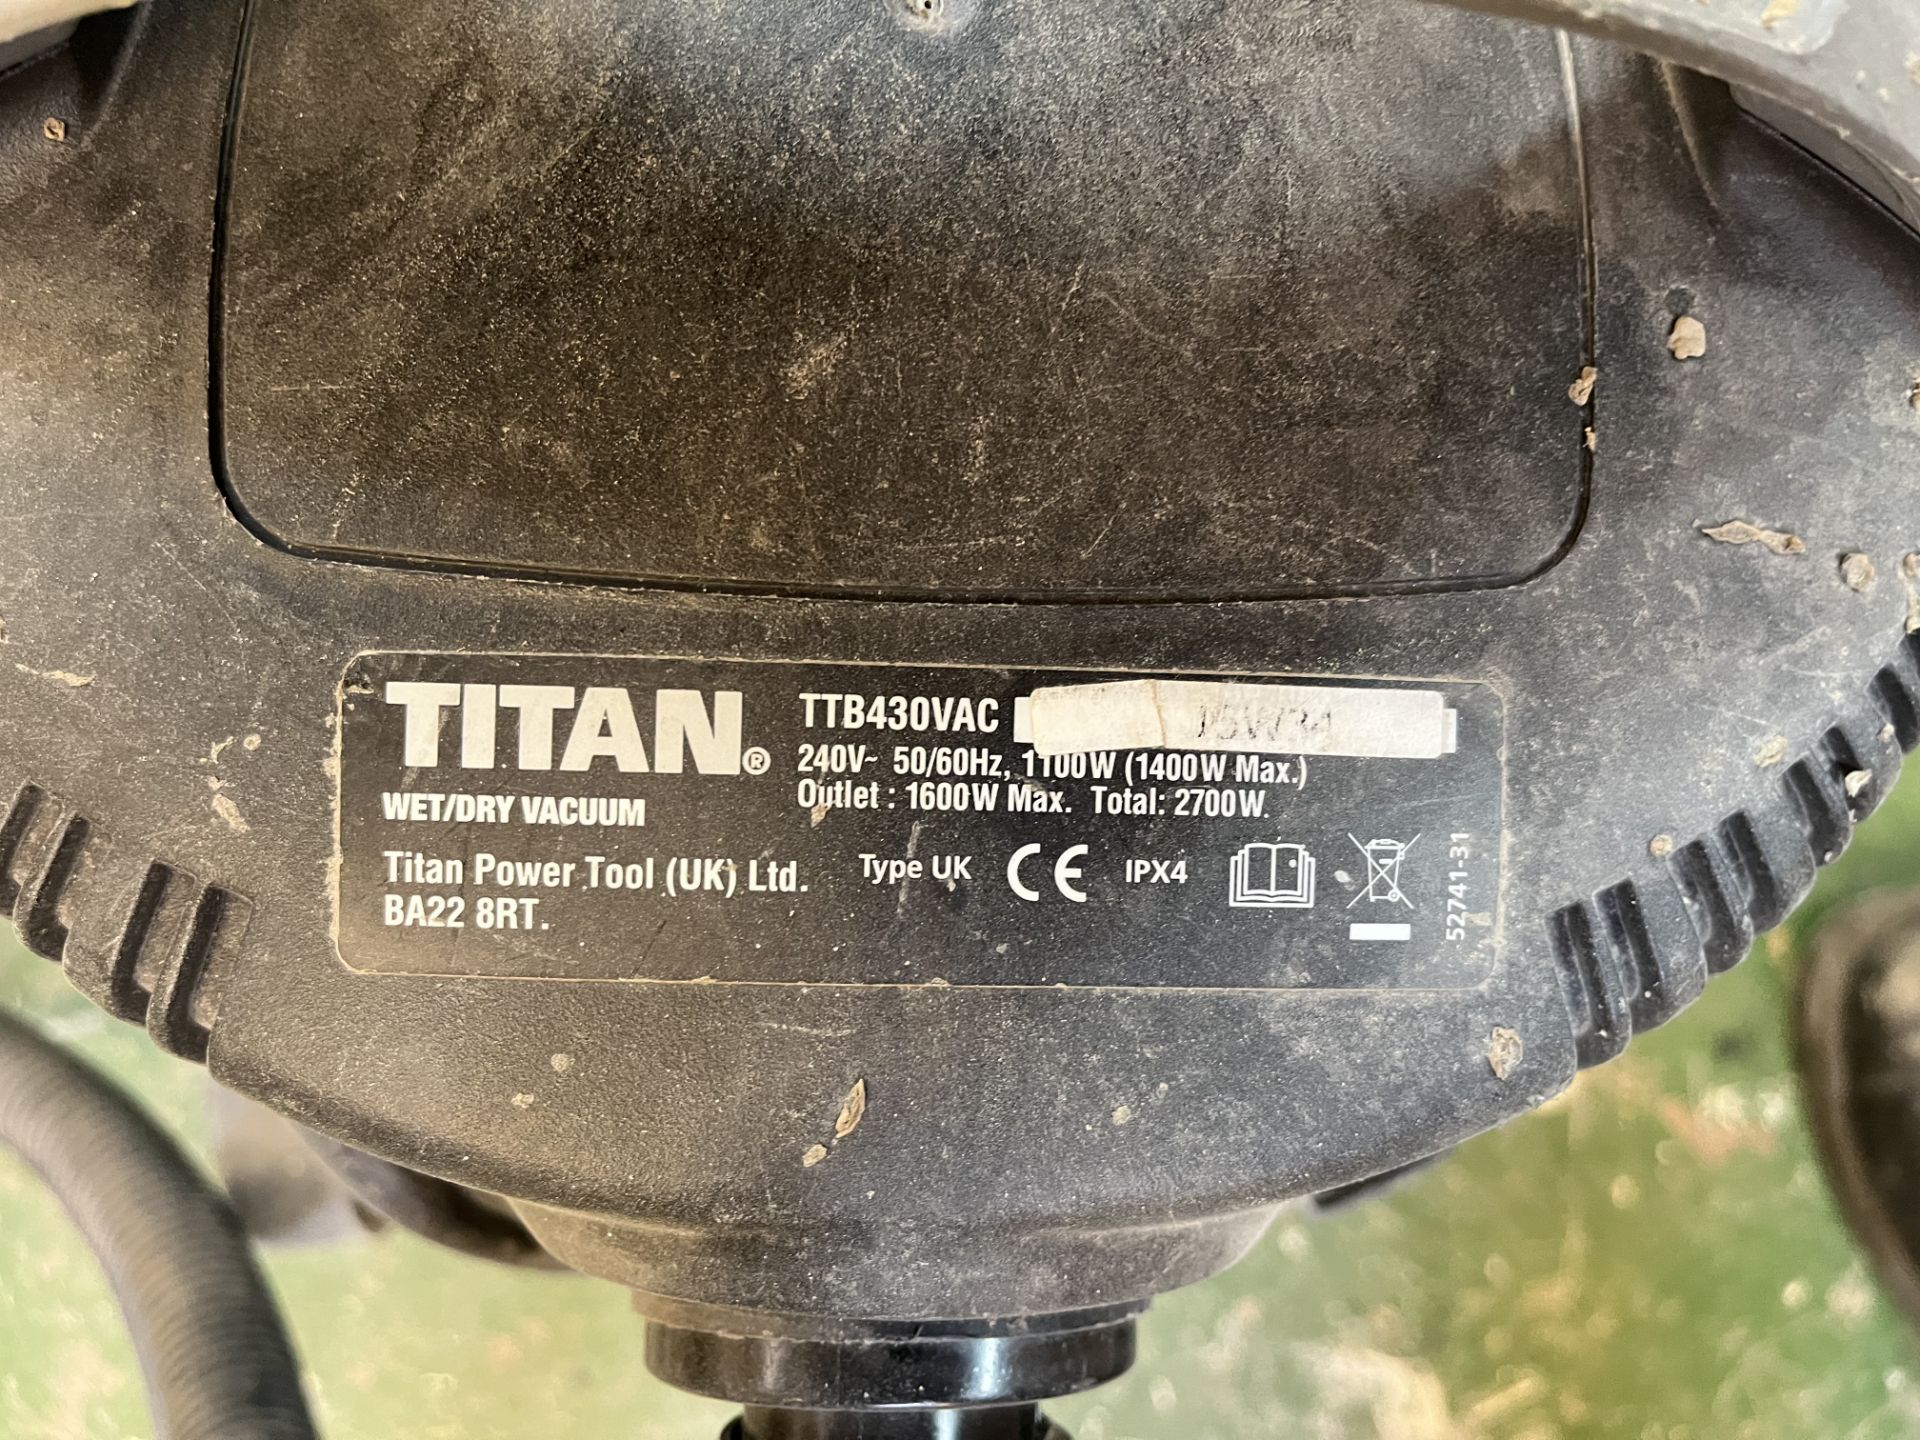 Titan Industrial Hoover - Image 4 of 4